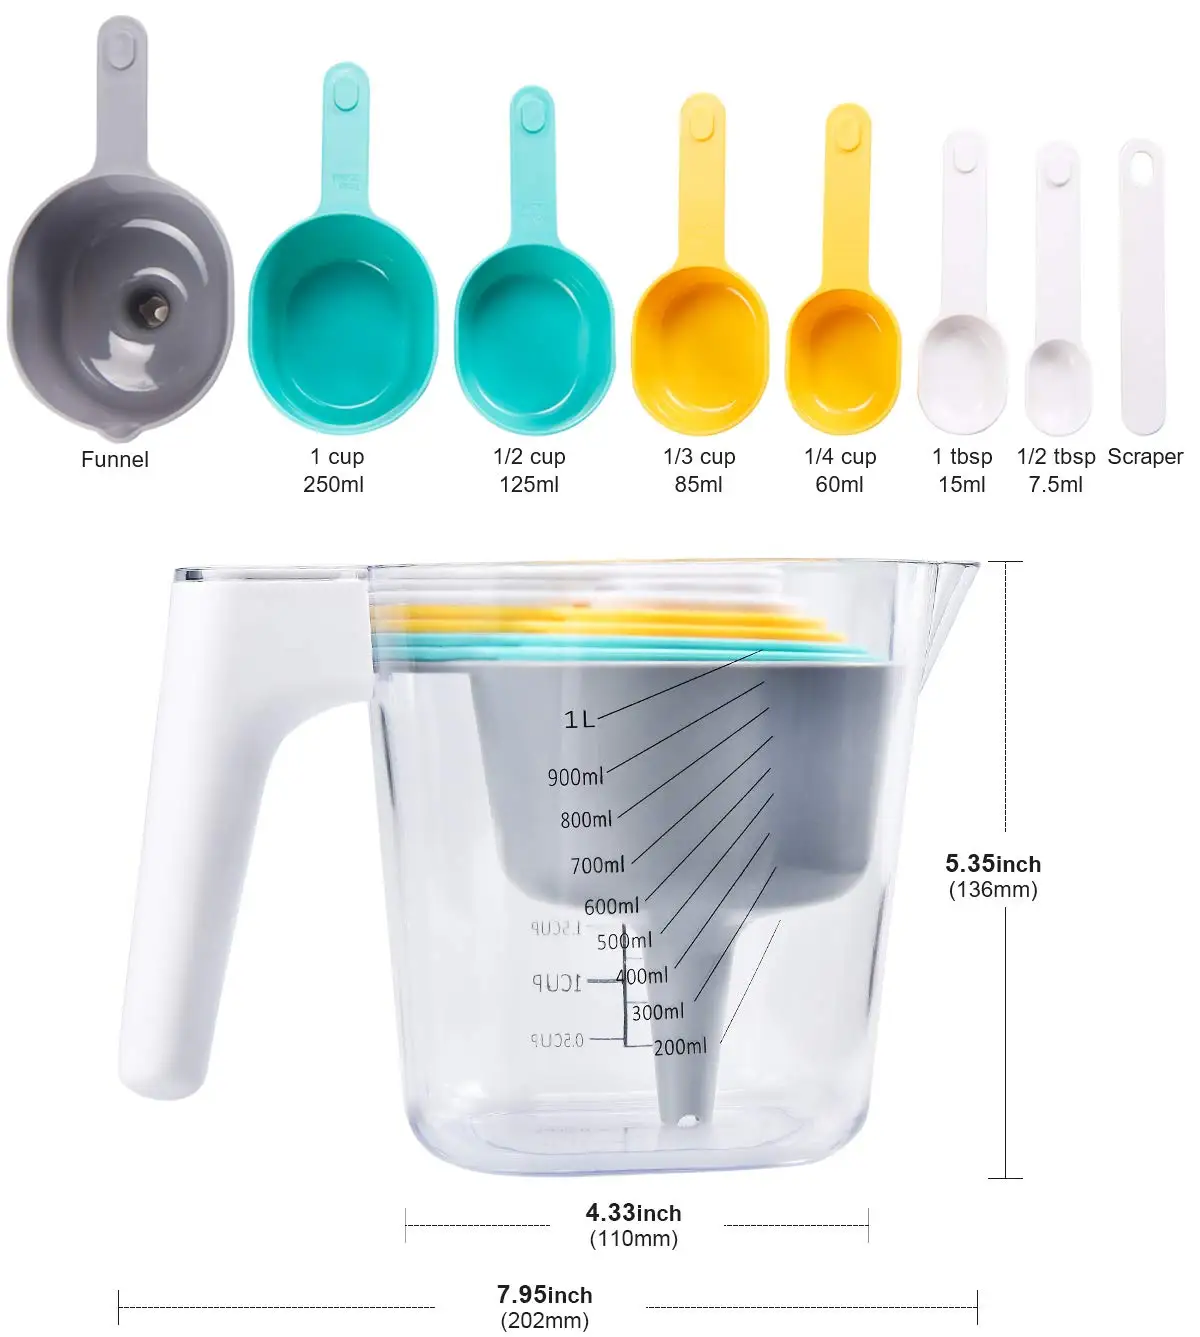 plastic measuring cups measuring spoons set kitchen